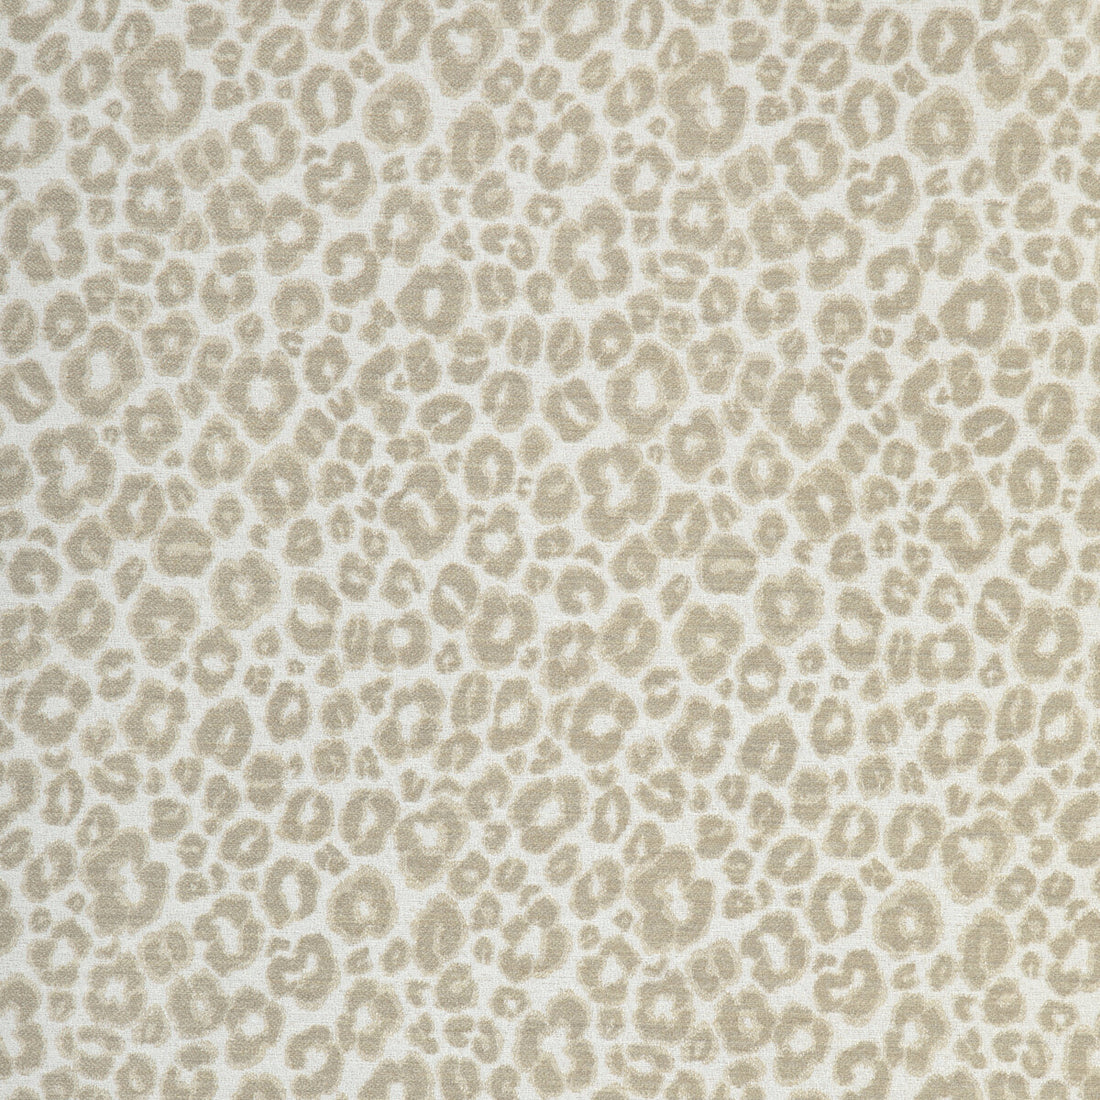 Kravet Design fabric in 36768-16 color - pattern 36768.16.0 - by Kravet Design in the Sea Island Indoor/Outdoor collection